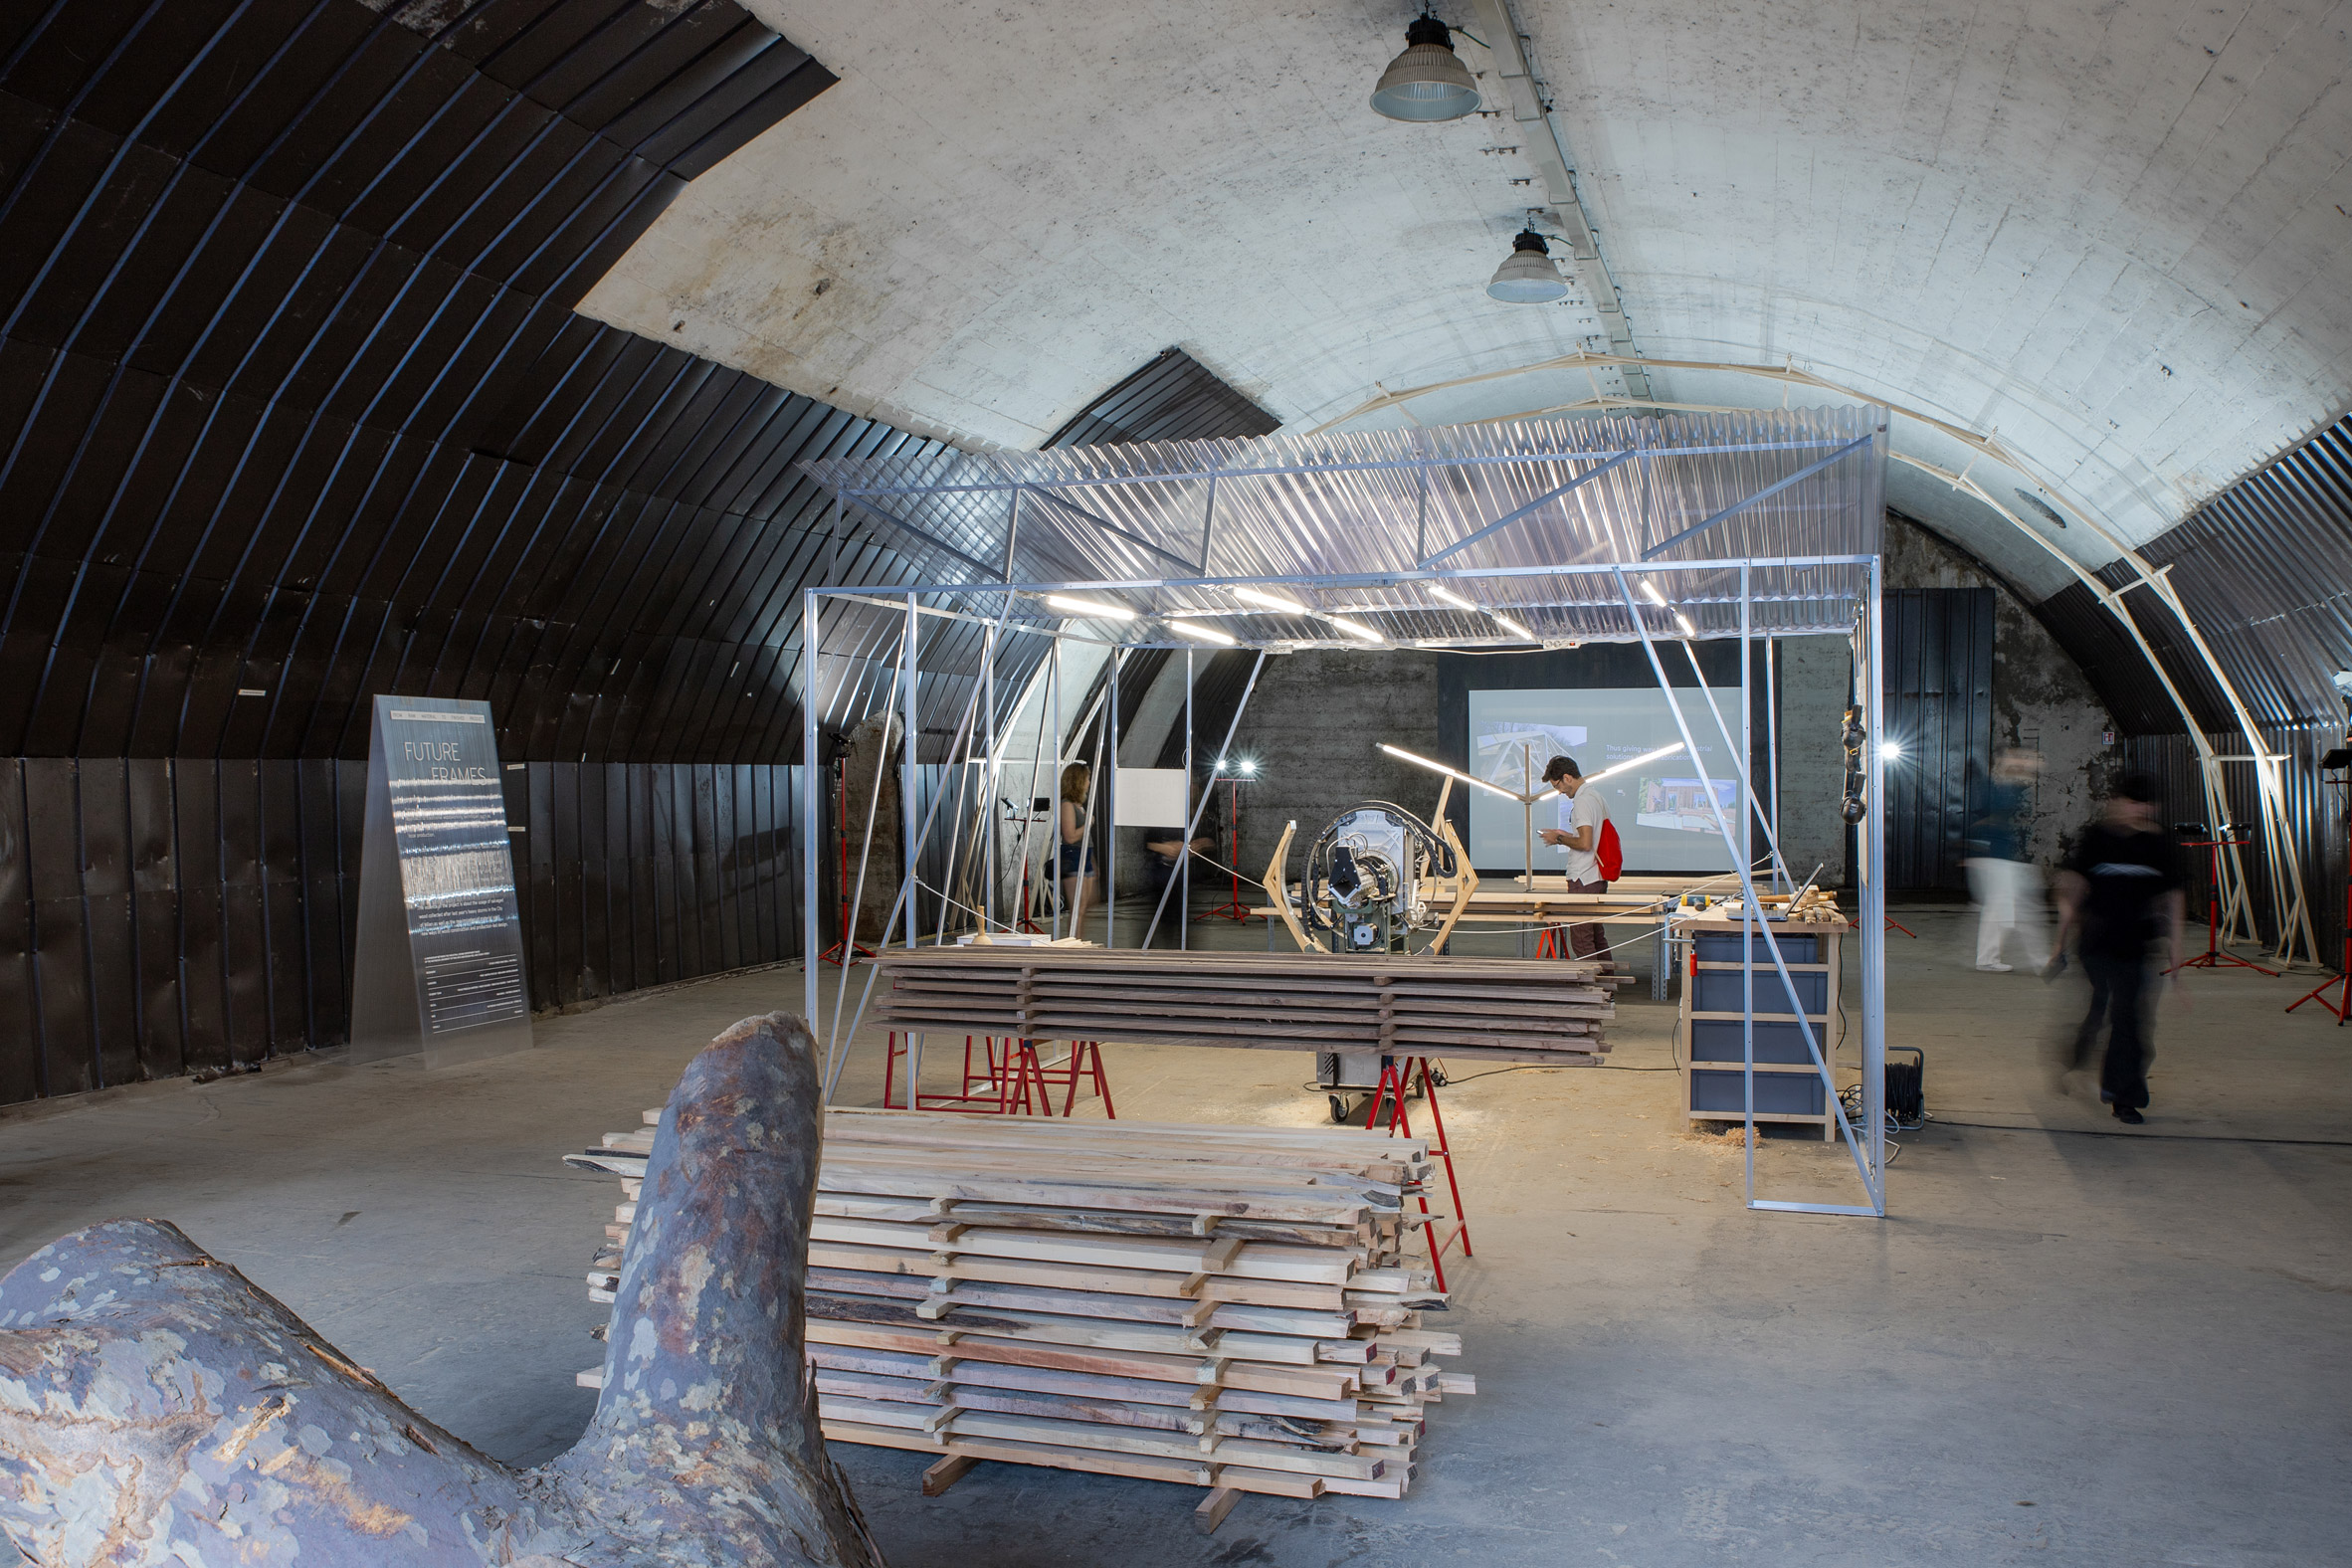 Dropcity In Progress展示历史隧道的现场重建|ART-Arrakis | 建筑室内设计的创新与灵感